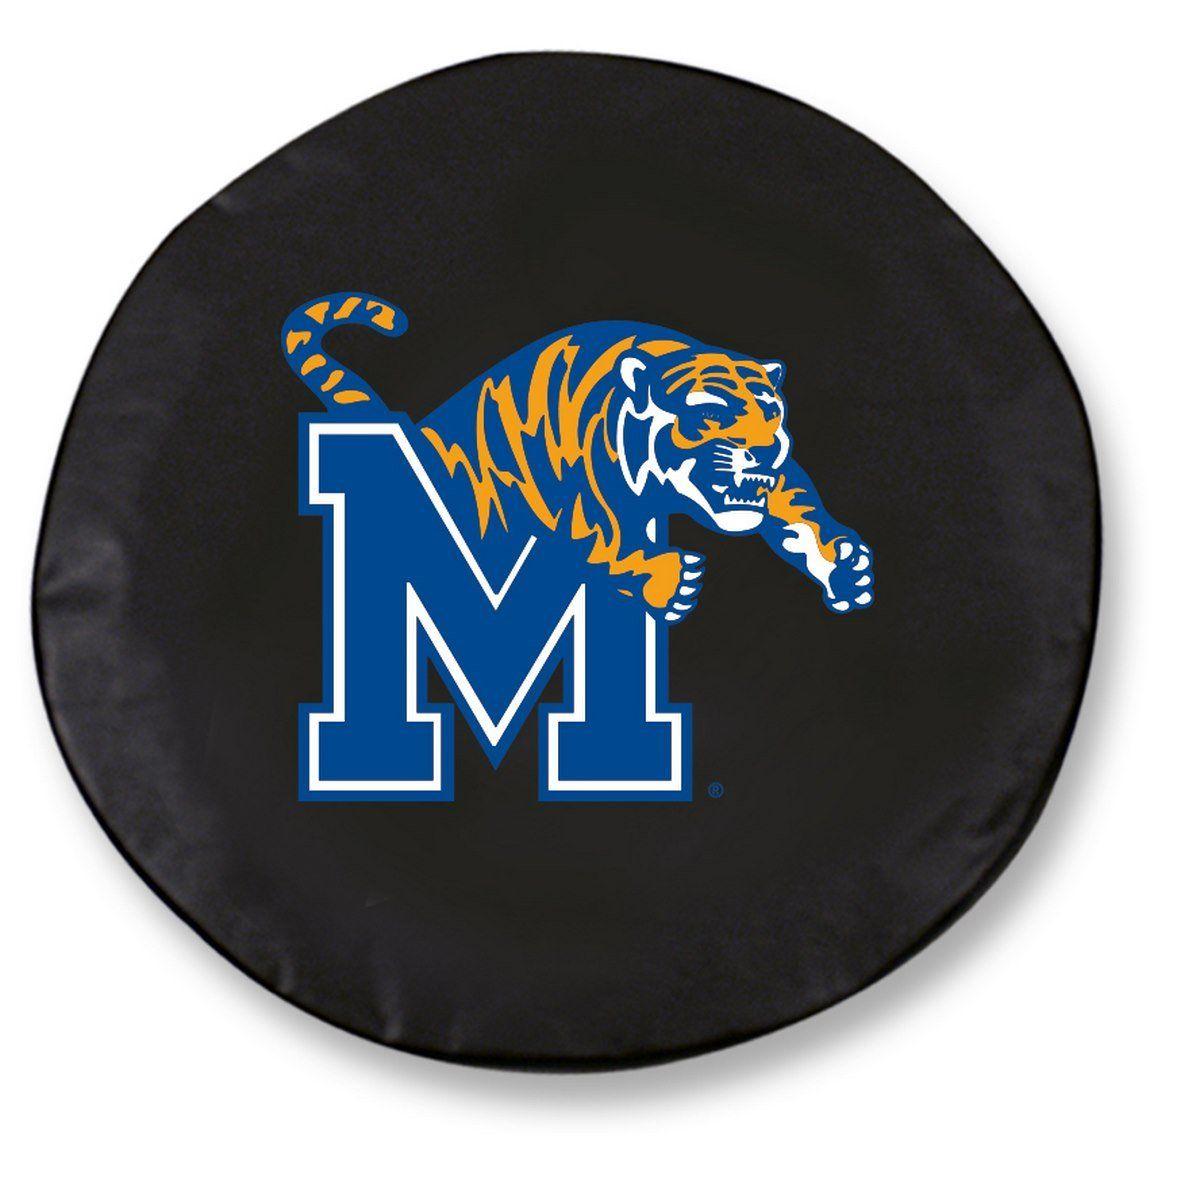 Memphis Tigers Logo - Amazon.com: HBS Memphis Tire Cover with Tigers Logo on Black Vinyl ...